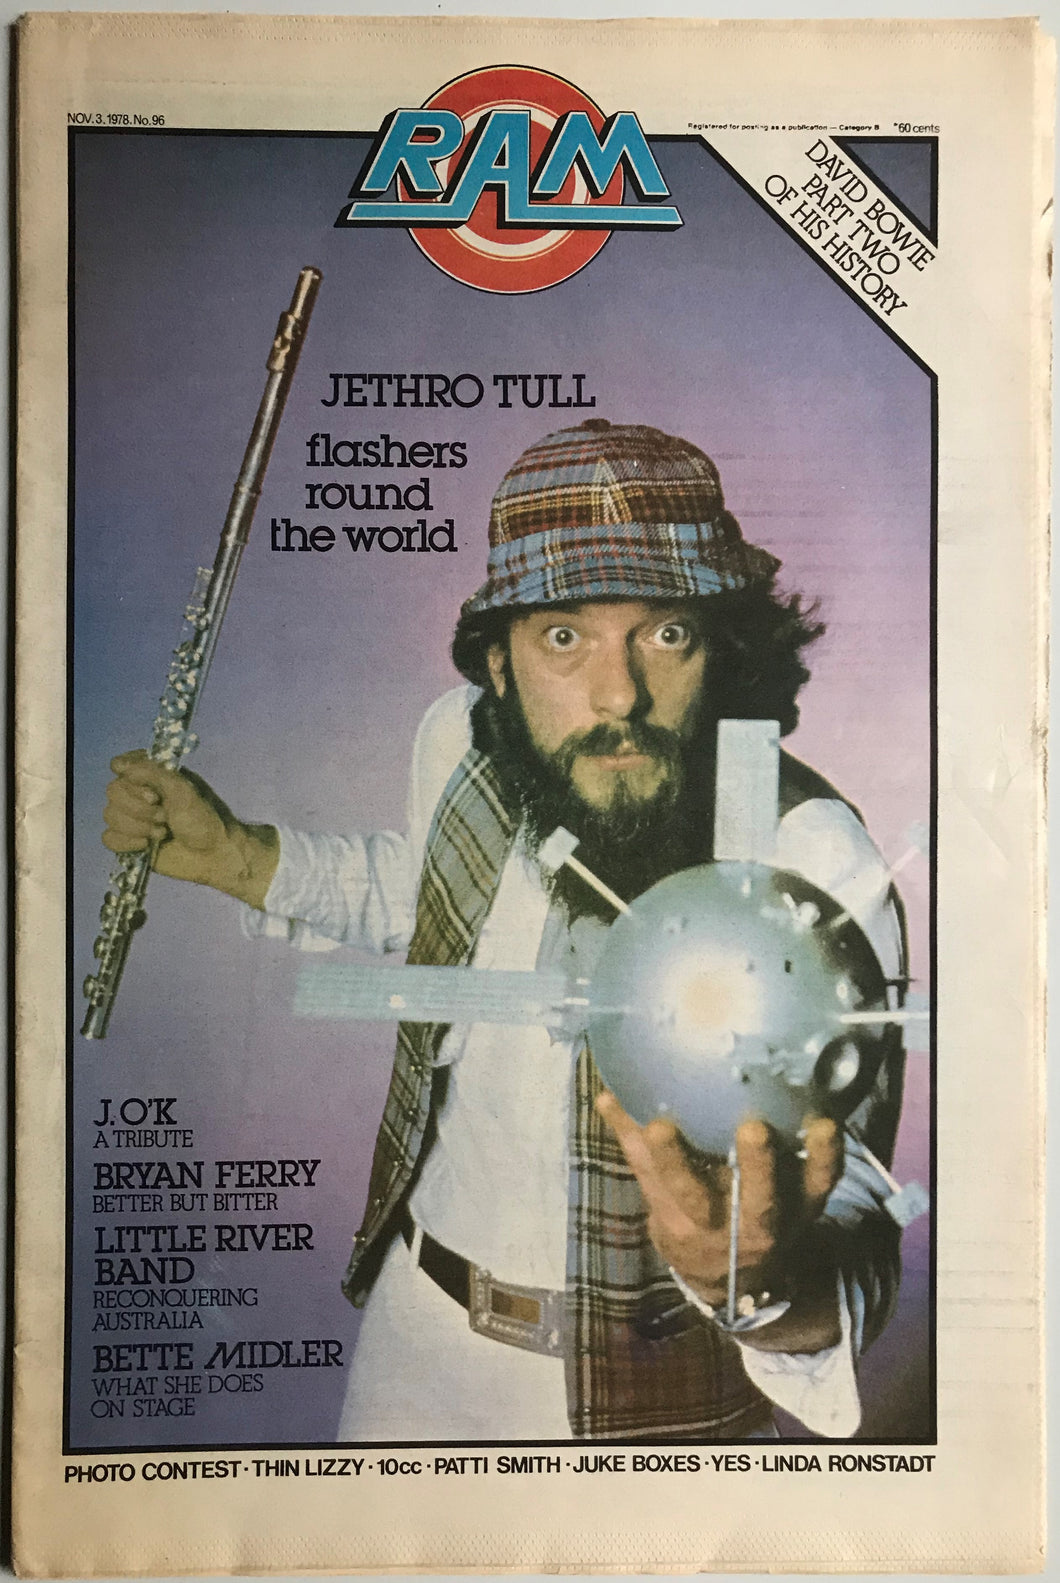 Jethro Tull - RAM no.96